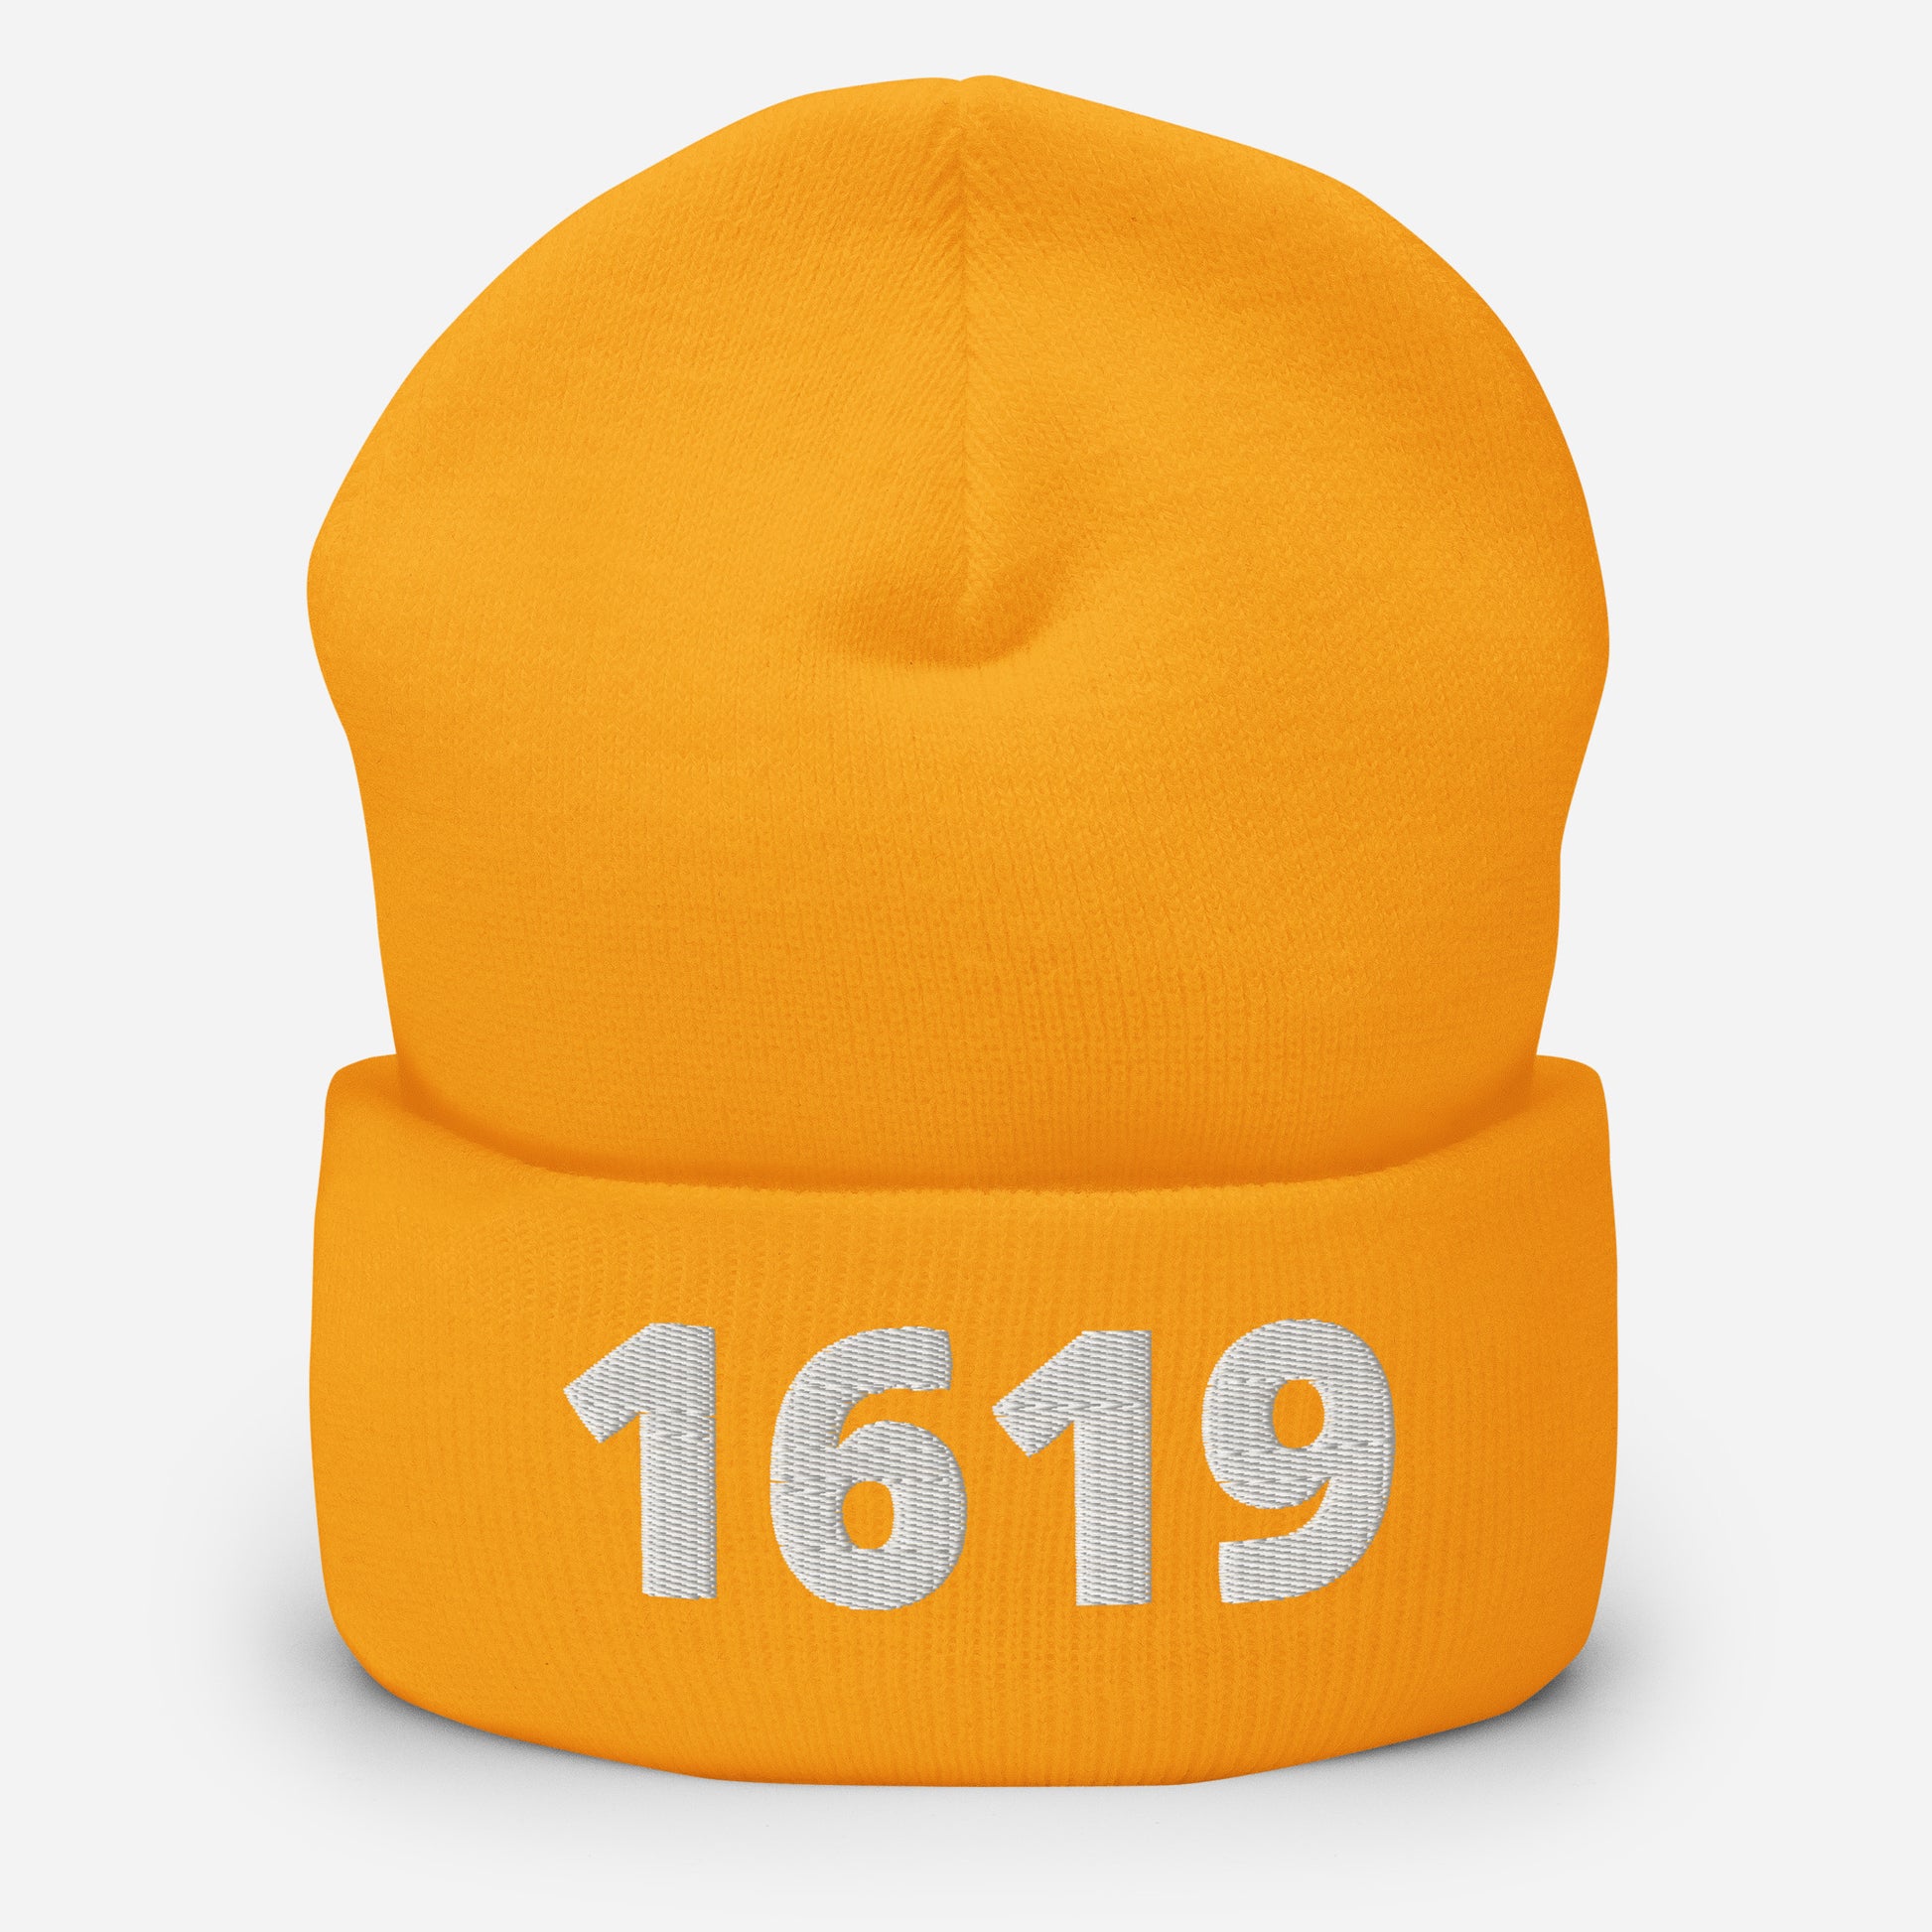 1619 Hat / Spike Lee Hat / Spike Lee 1619 / 1619 project Cuffed Beanie